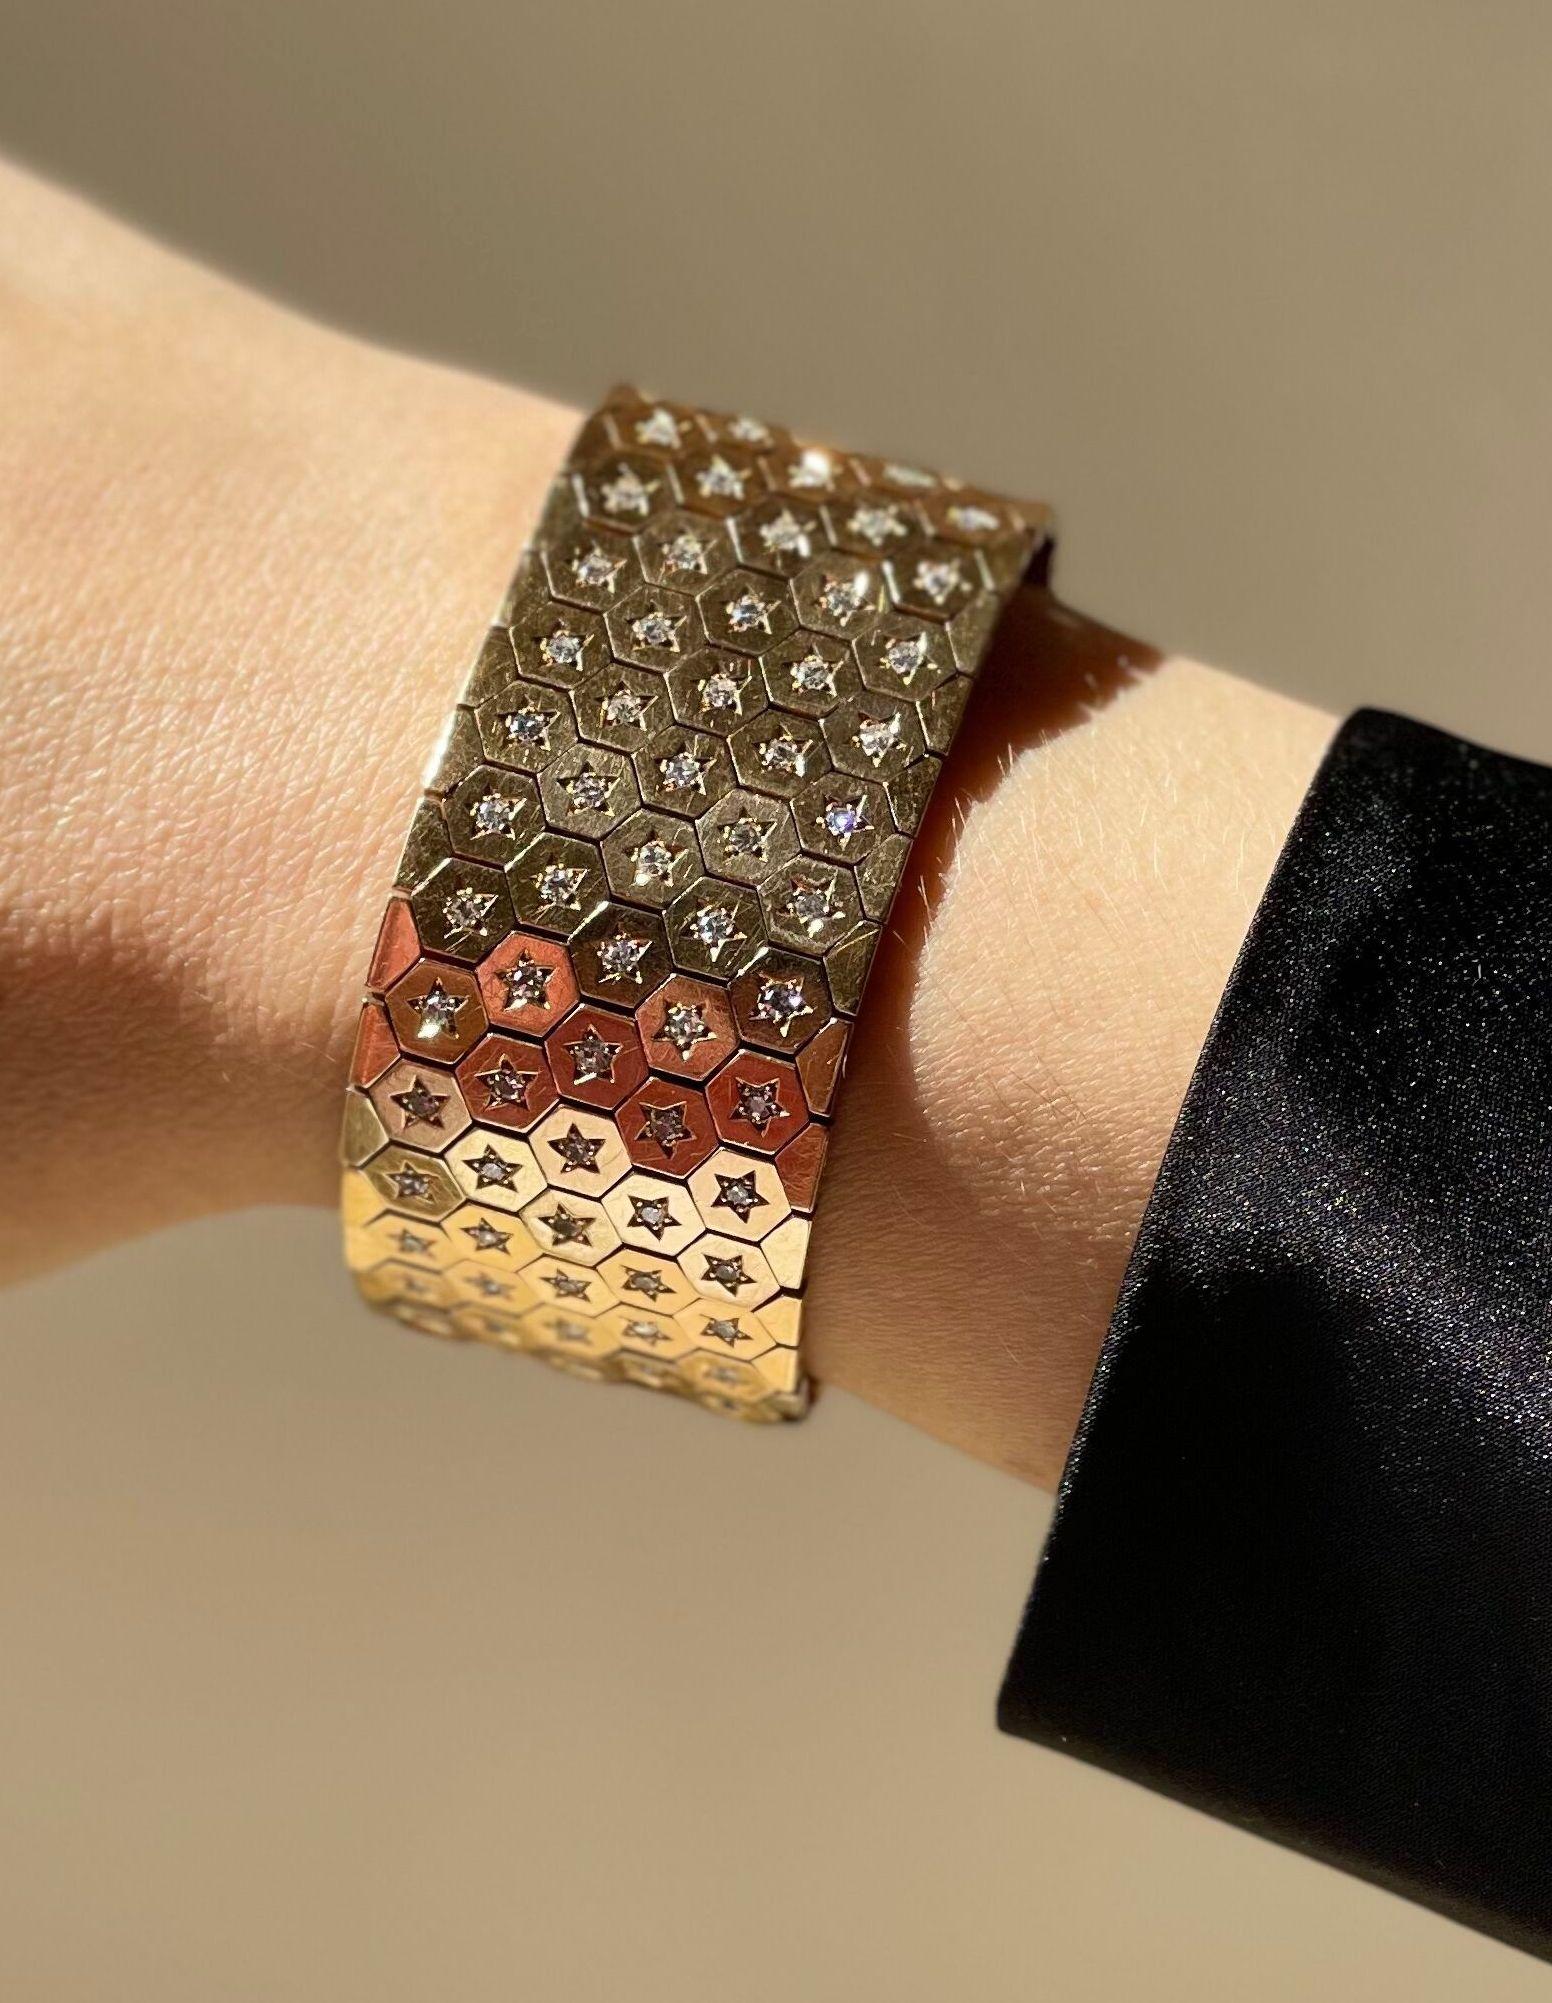 Retro 18k rose gold wide bracelet by Boucheron Paris, set with approx. 2.60ctw in G/VS diamonds, featuring honeycomb design. Bracelet is 6 5/8